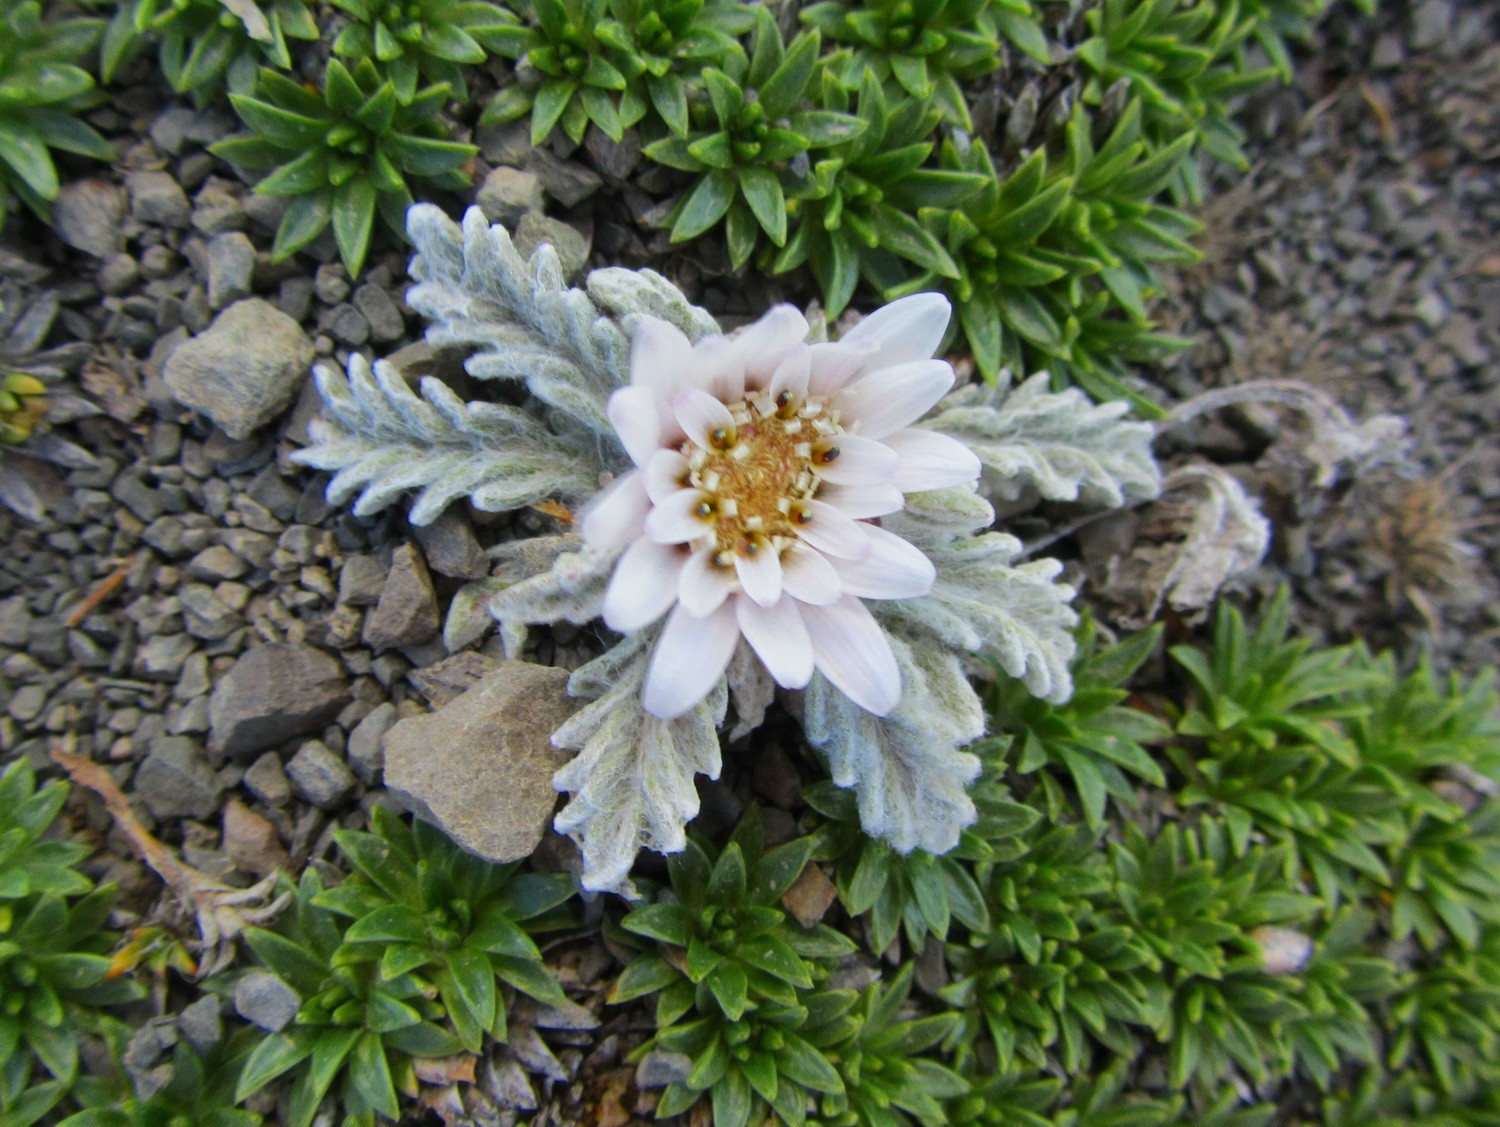 Other beautiful flower on Cerro de los Cristales